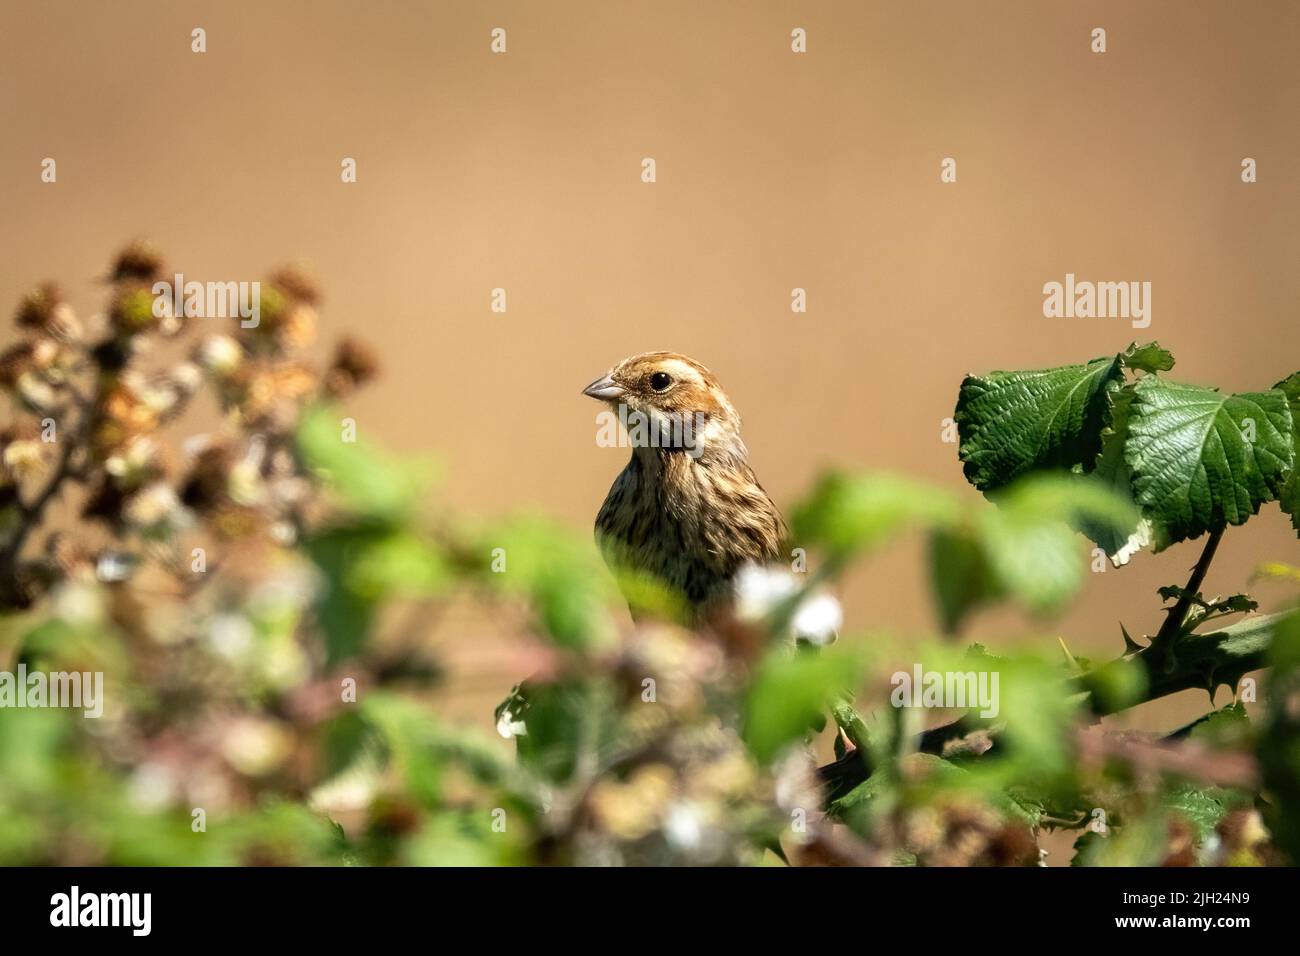 A Female reed bunting bird Latin name Emberiza schoeniclus in a bramble bush Stock Photo